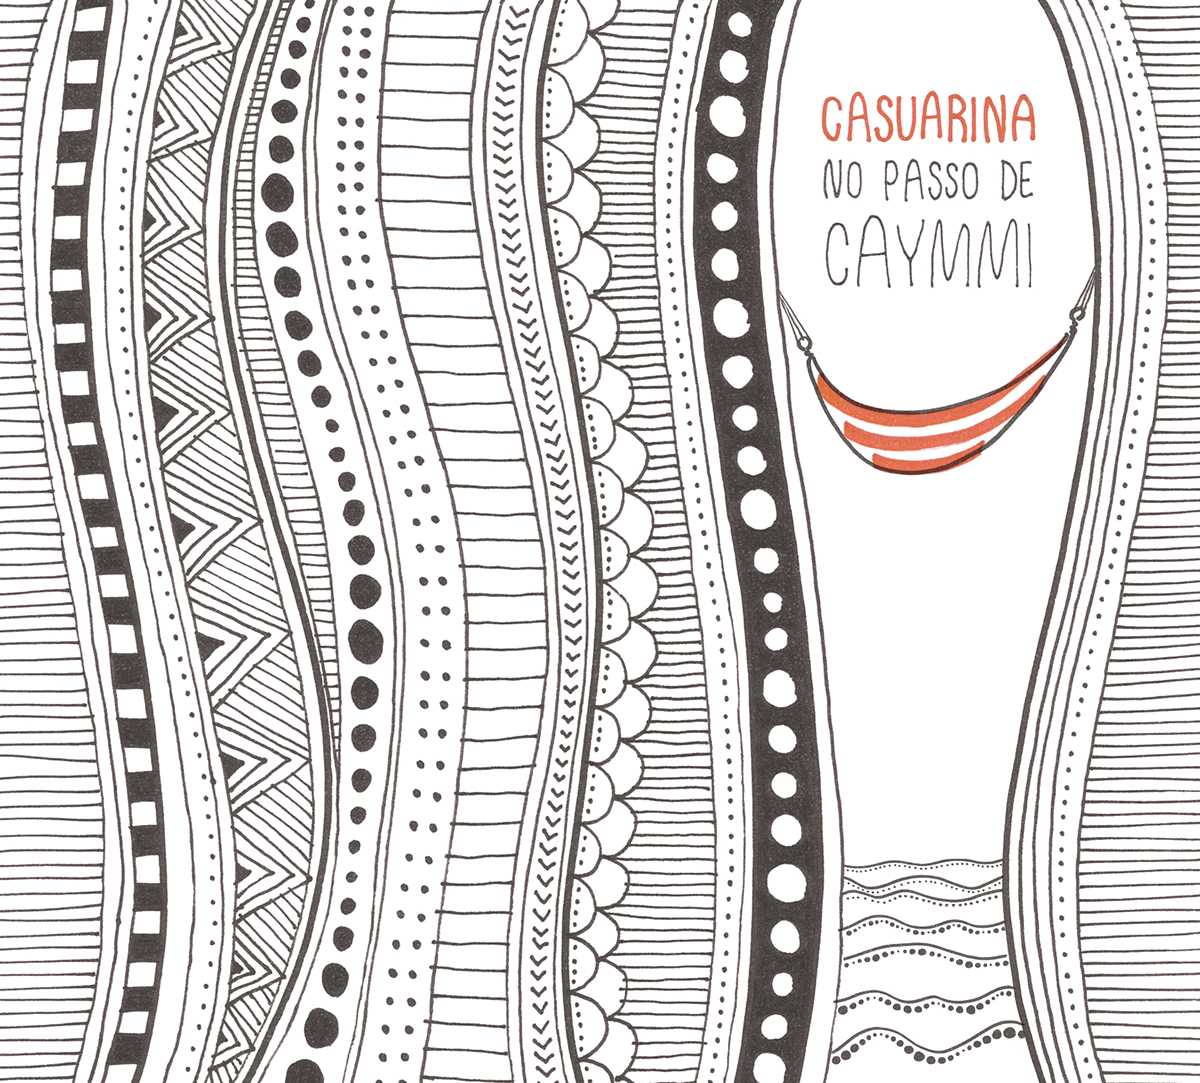 handdrawn cover Album caymmi casuarina sharpie cd artisanal craft culture Brazil Brasil Samba MPB art